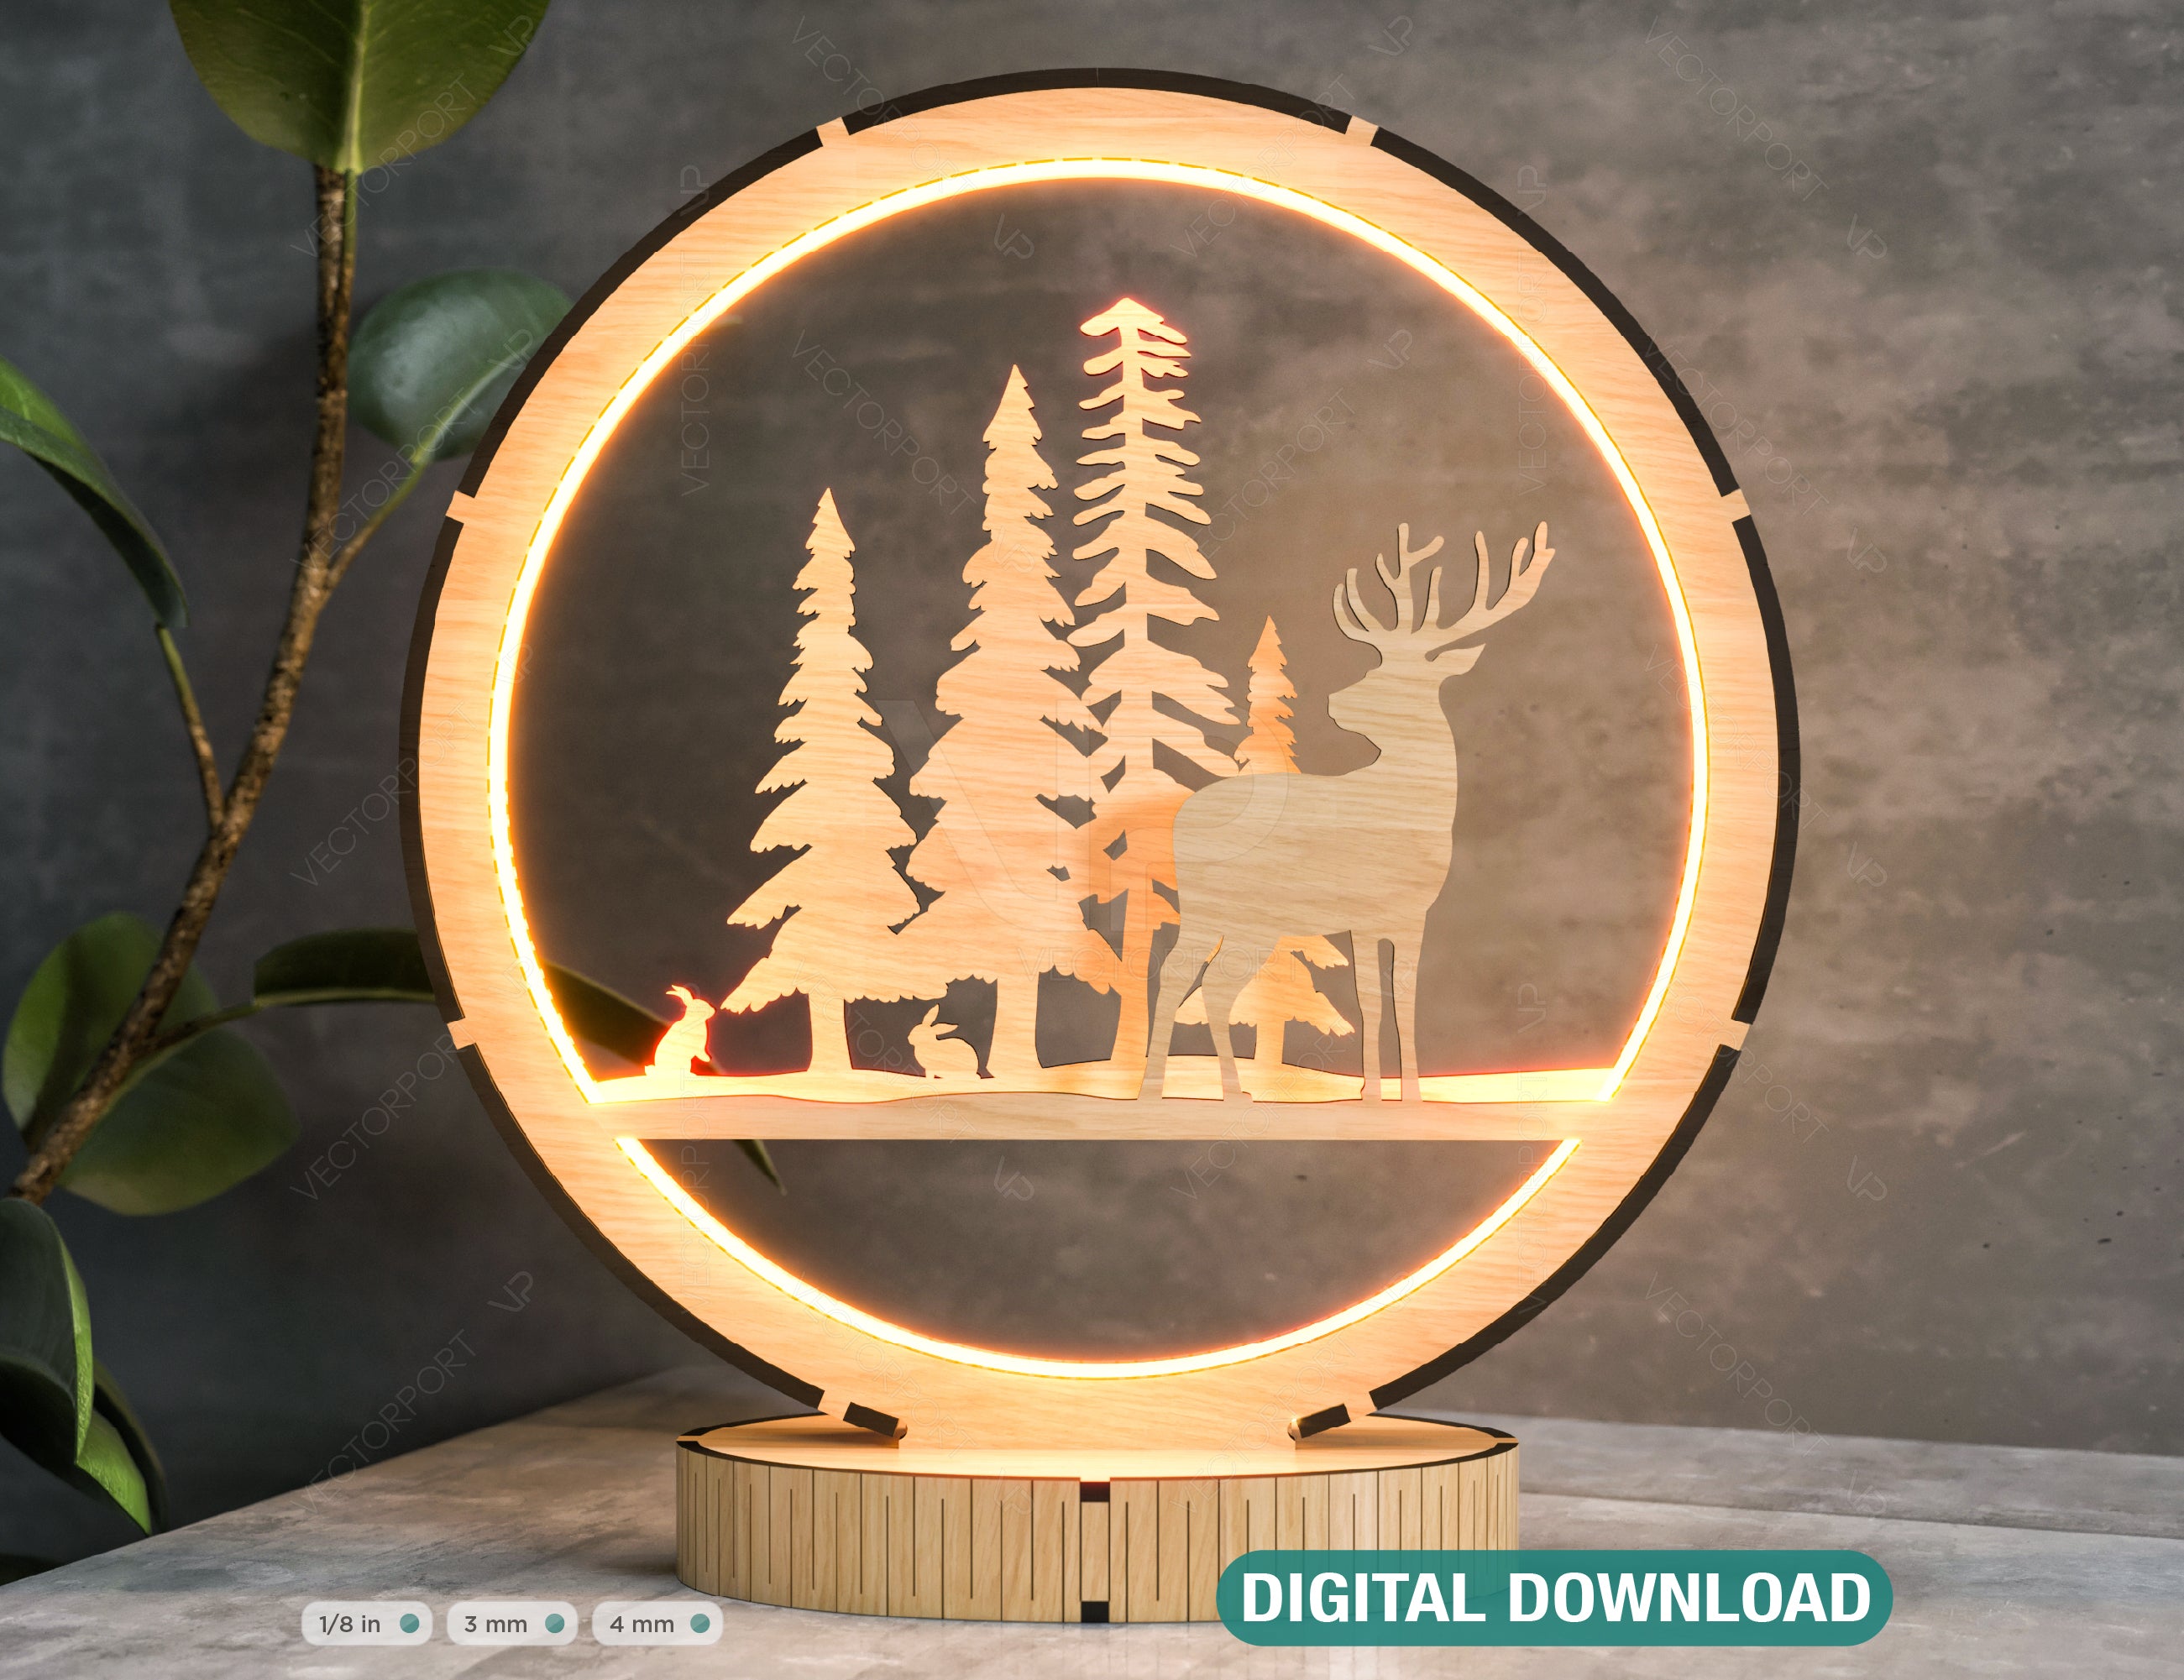 Snowy Scene Deer 3D Led Light Laser Cut Night Lamp Round Modern Bedside Table Lamp Digital Download |#U256|